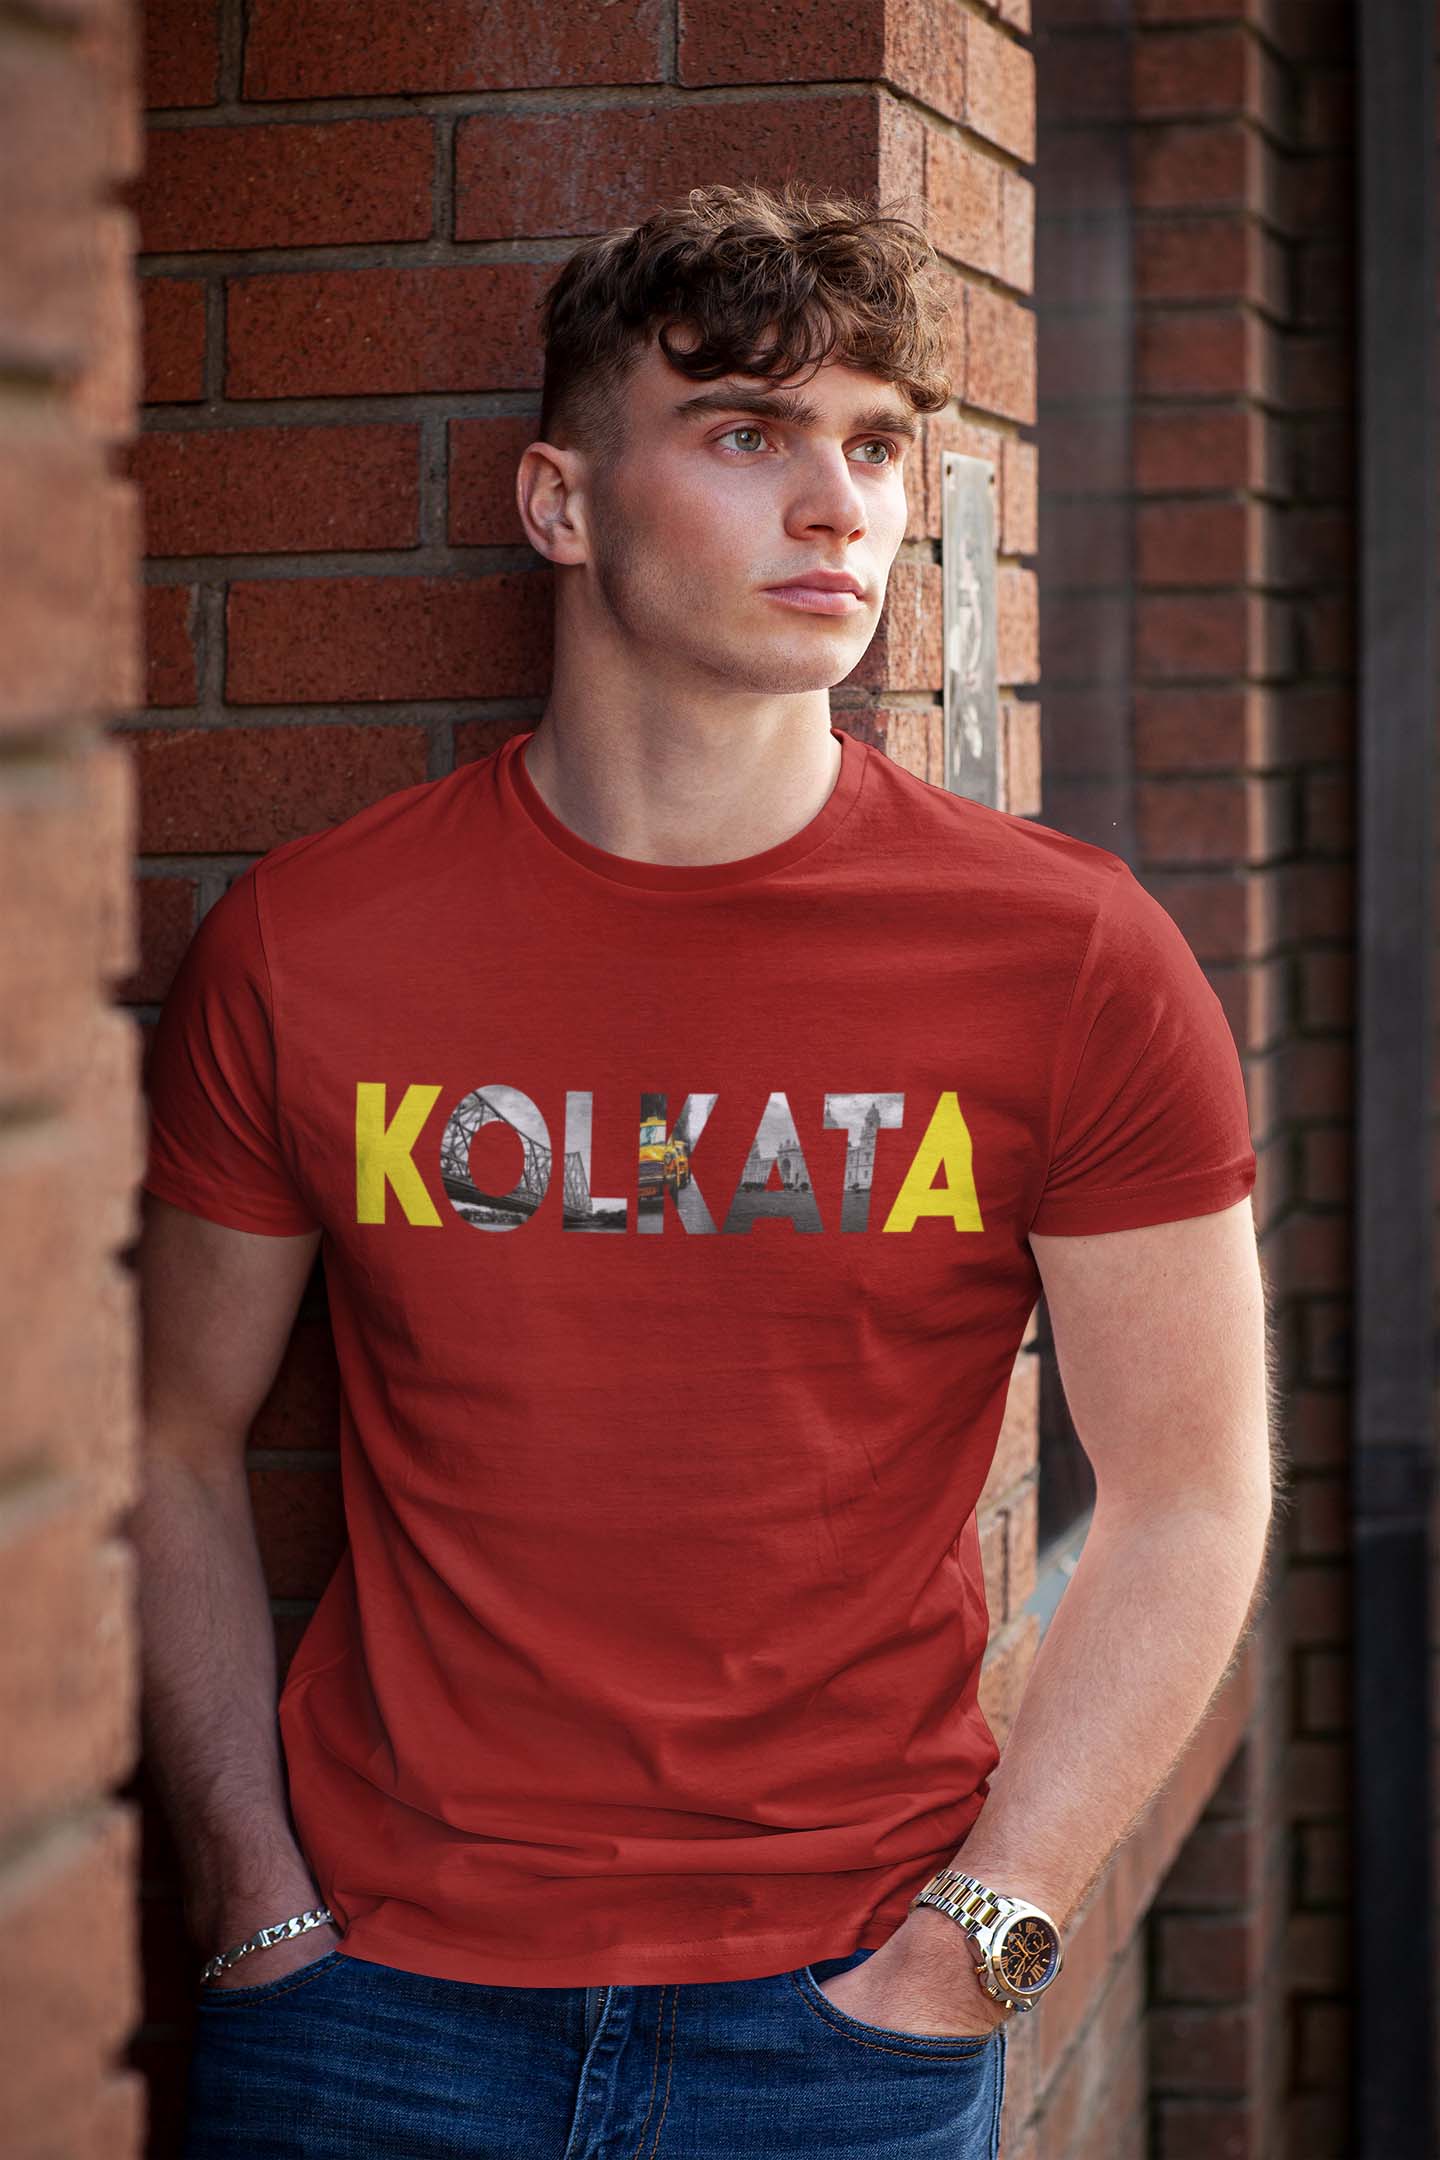 Old Kolkata T Shirt Cherry Red